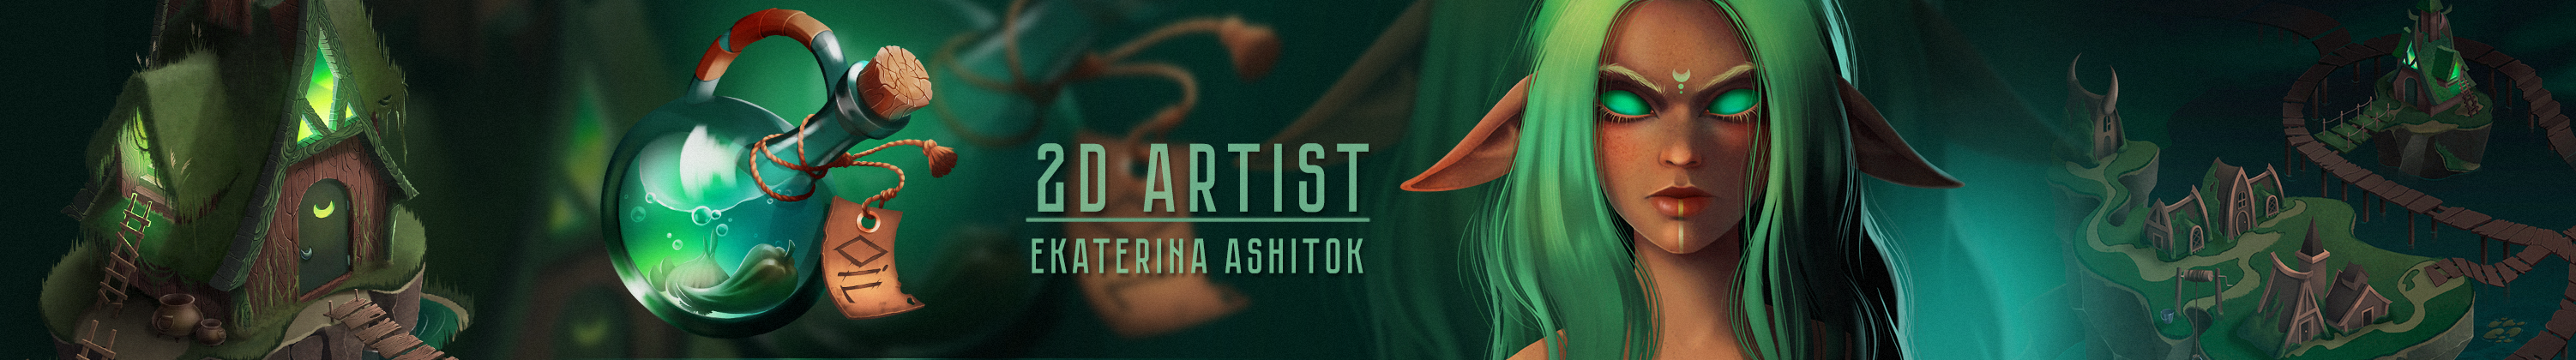 Ekaterina A's profile banner